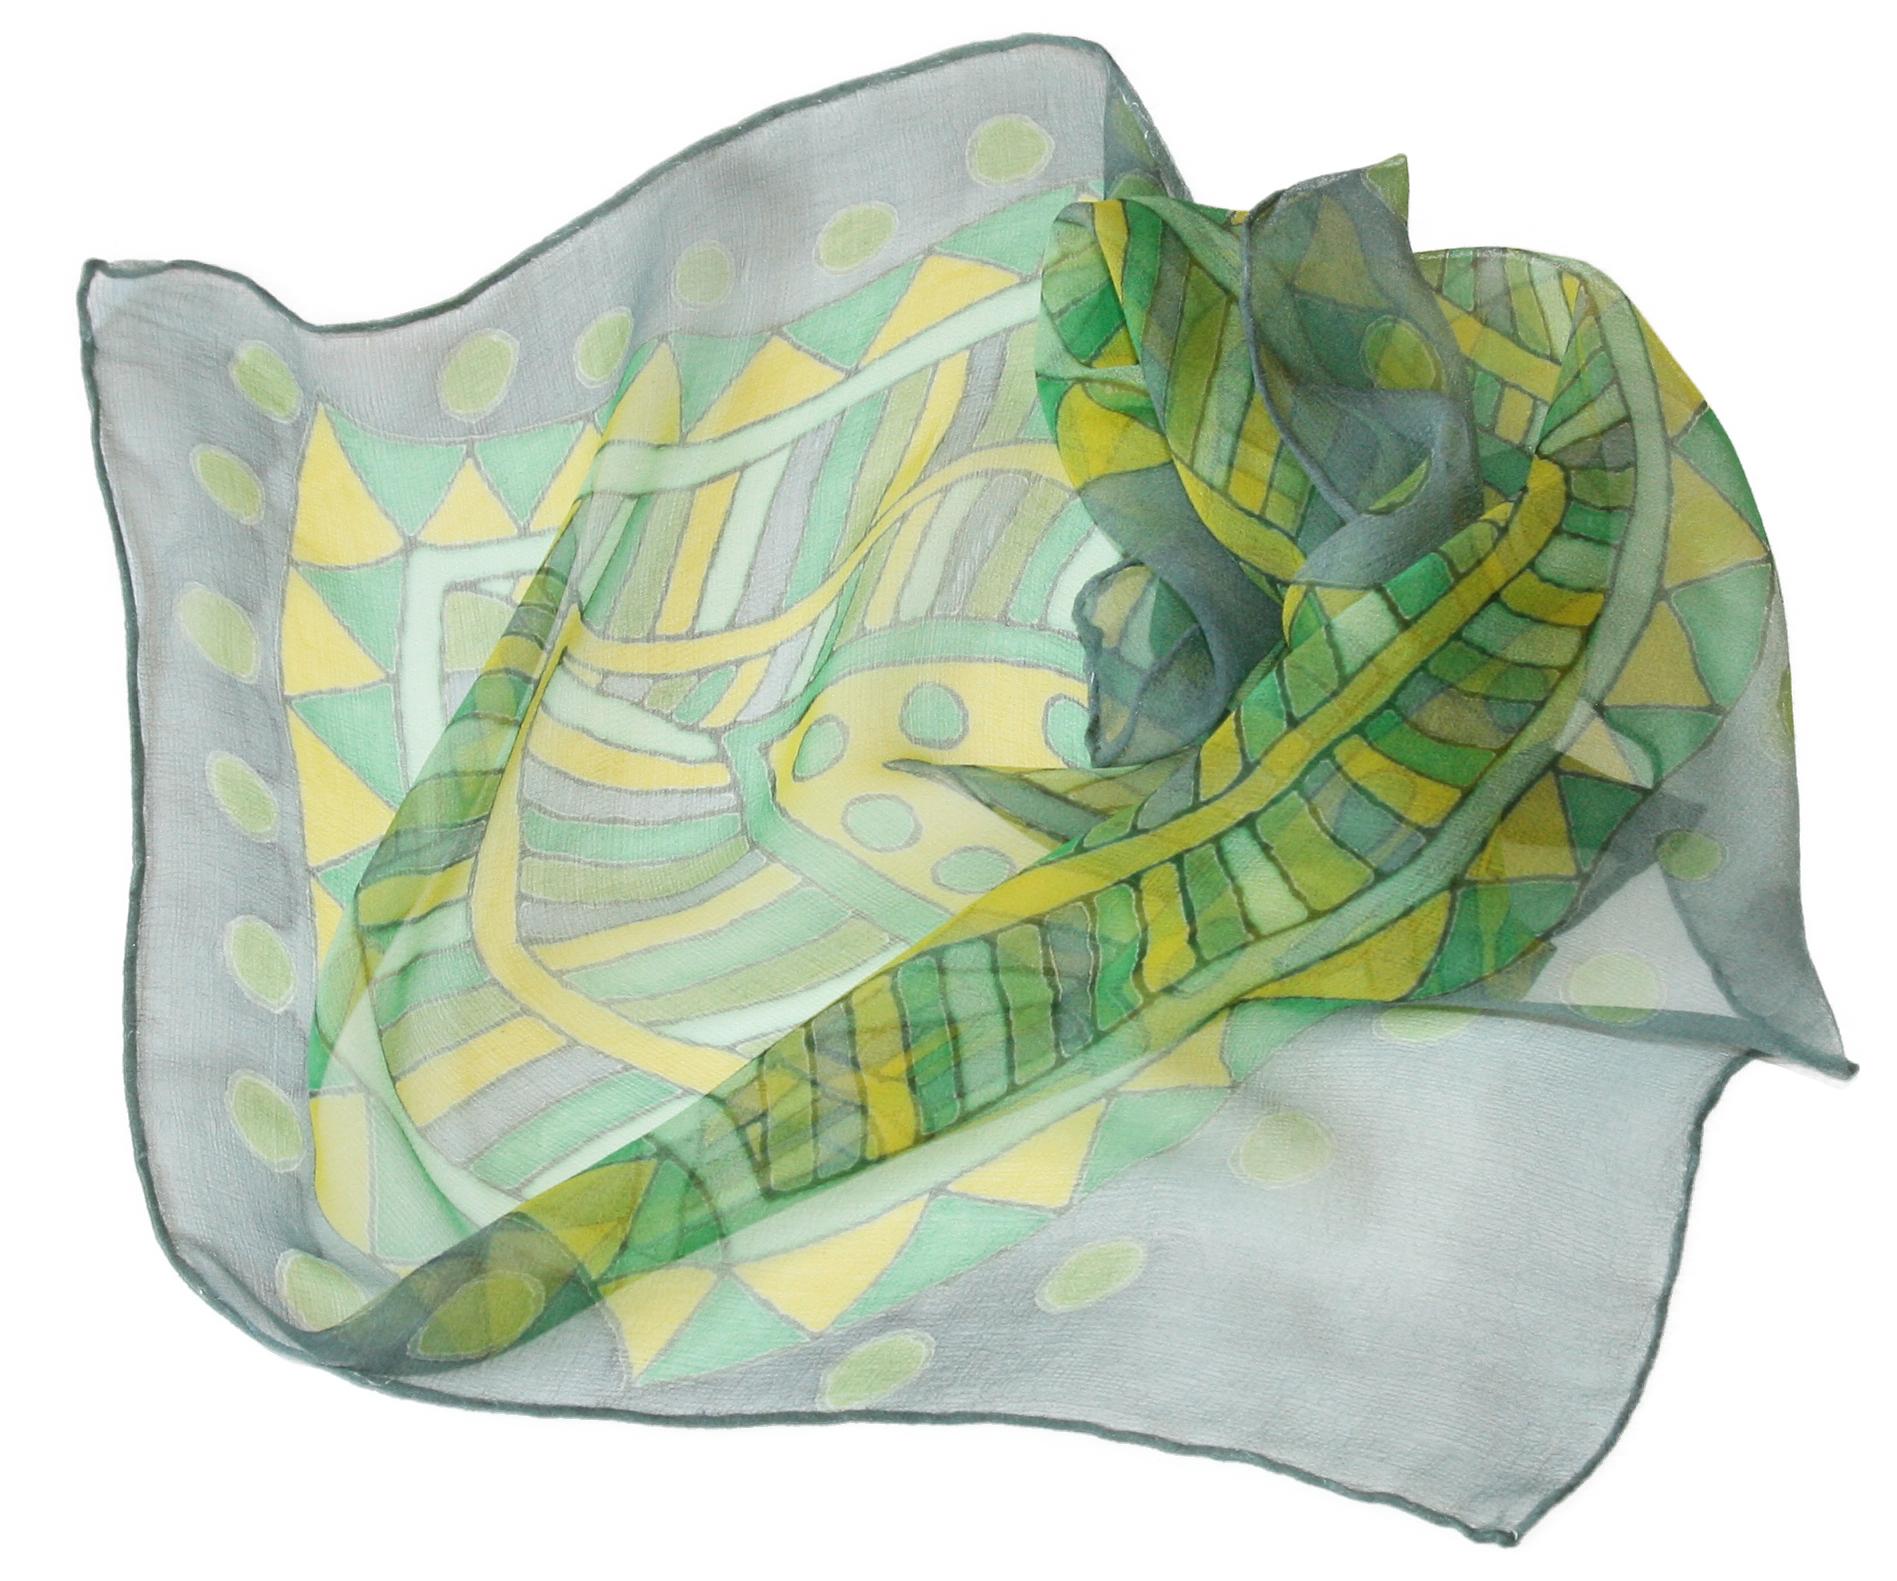 Malovaný hedvábný šátek - Ornament žluto-zelený